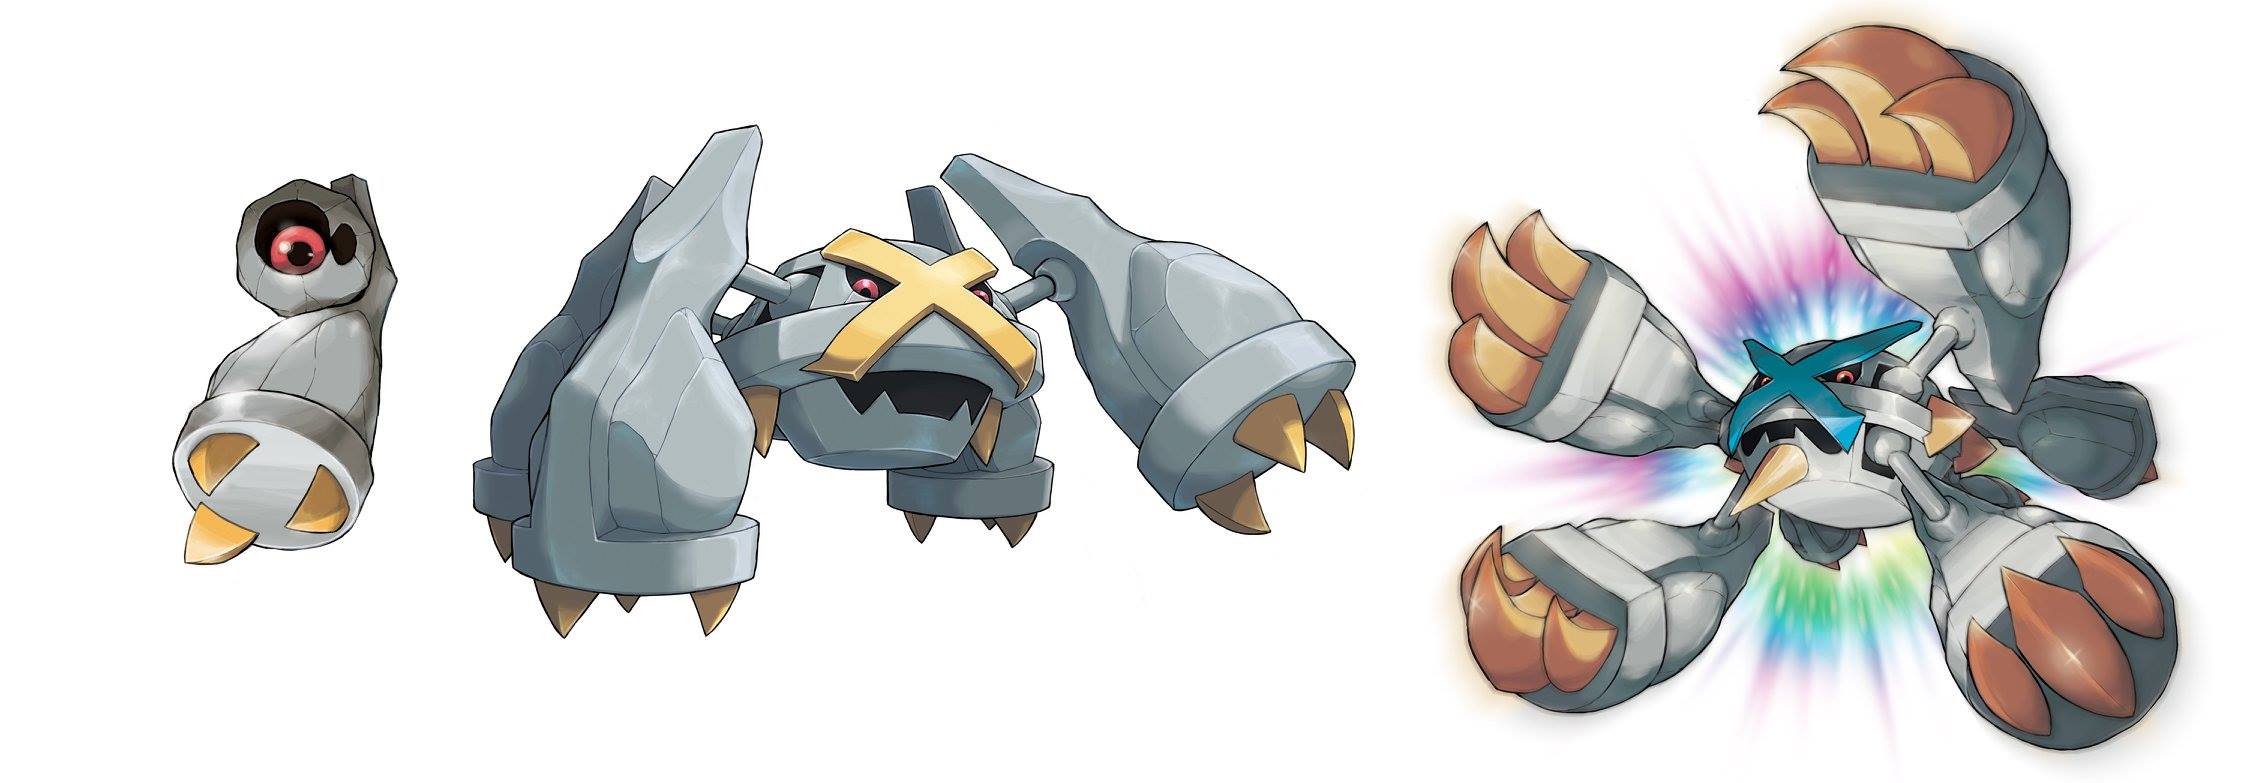 Shiny Beldum, Shiny Metagross and Shiny Mega Metagross. Pokémon